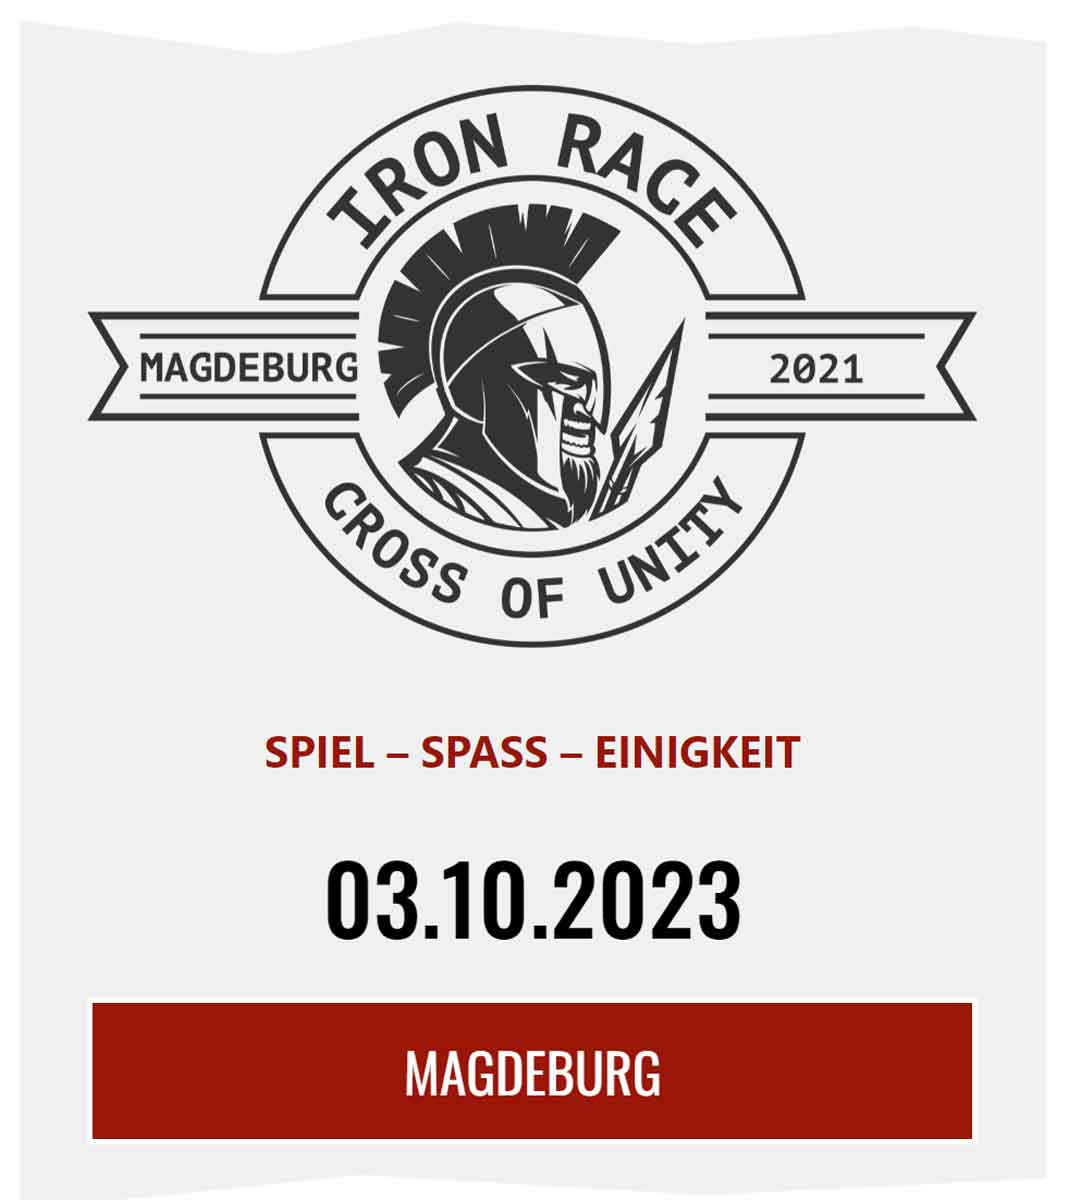 23.10.2023 - IronRace - Cross of Unity - Magdeburg